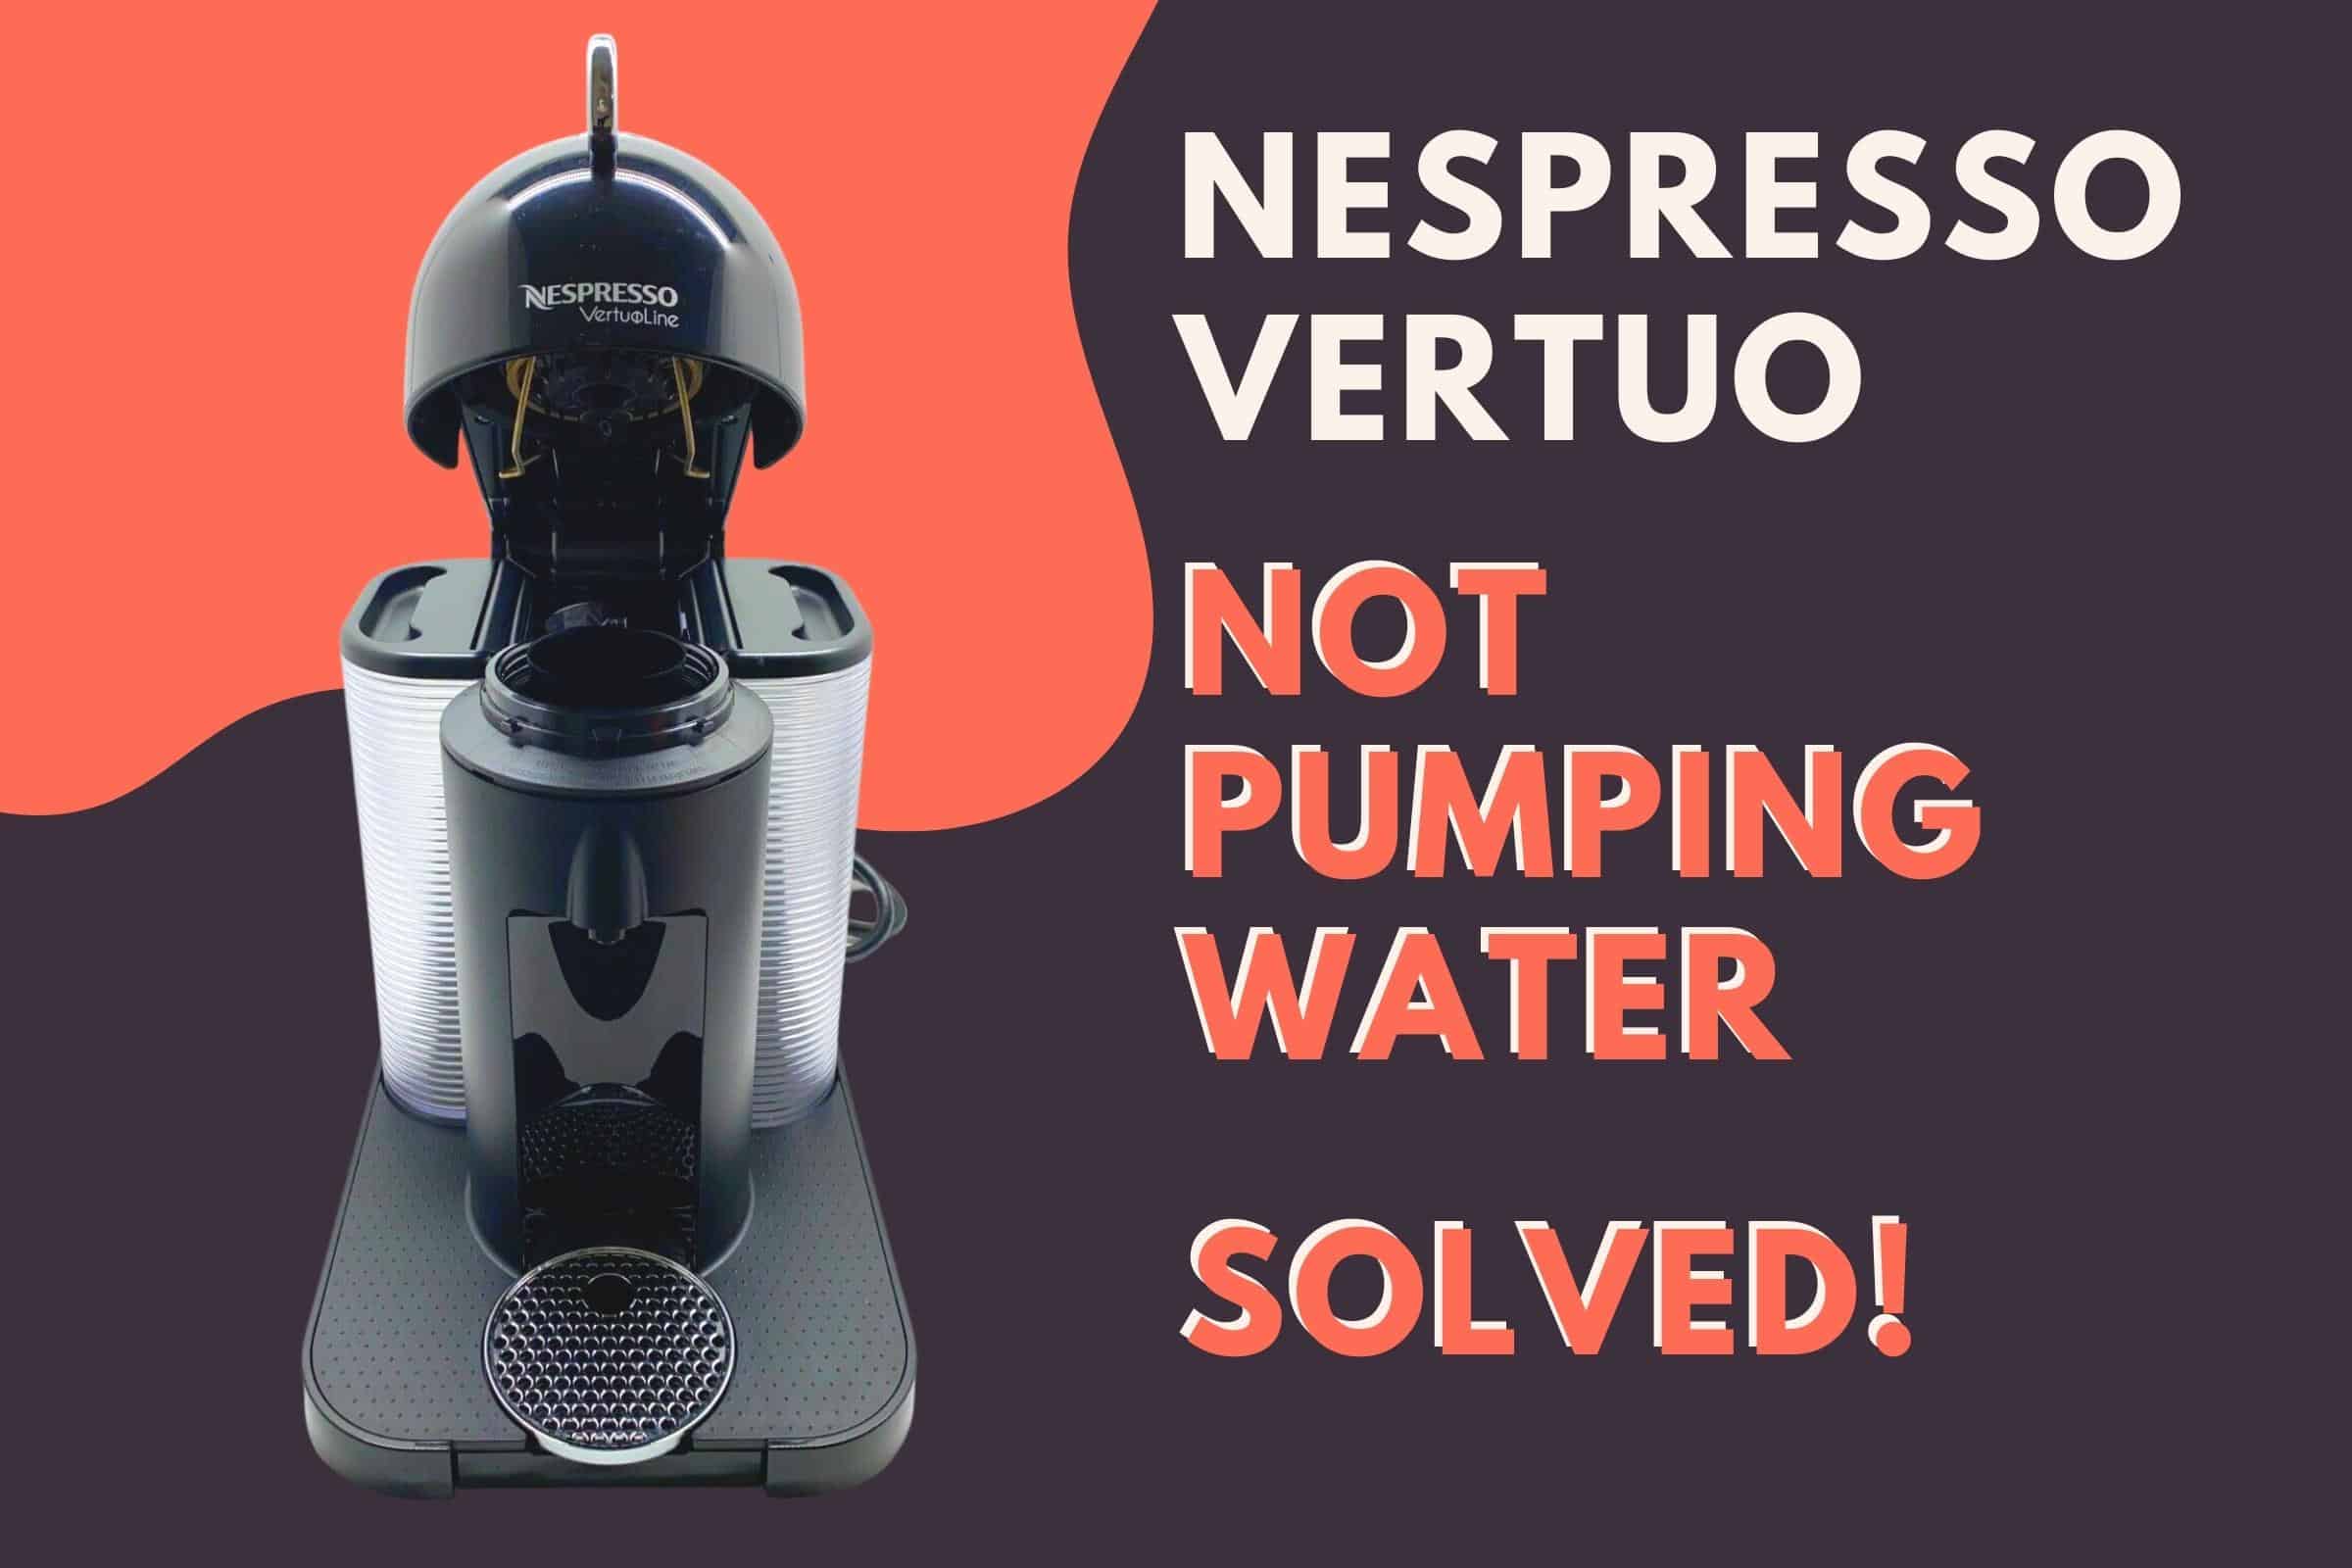 Nespresso Vertuo not pumping water